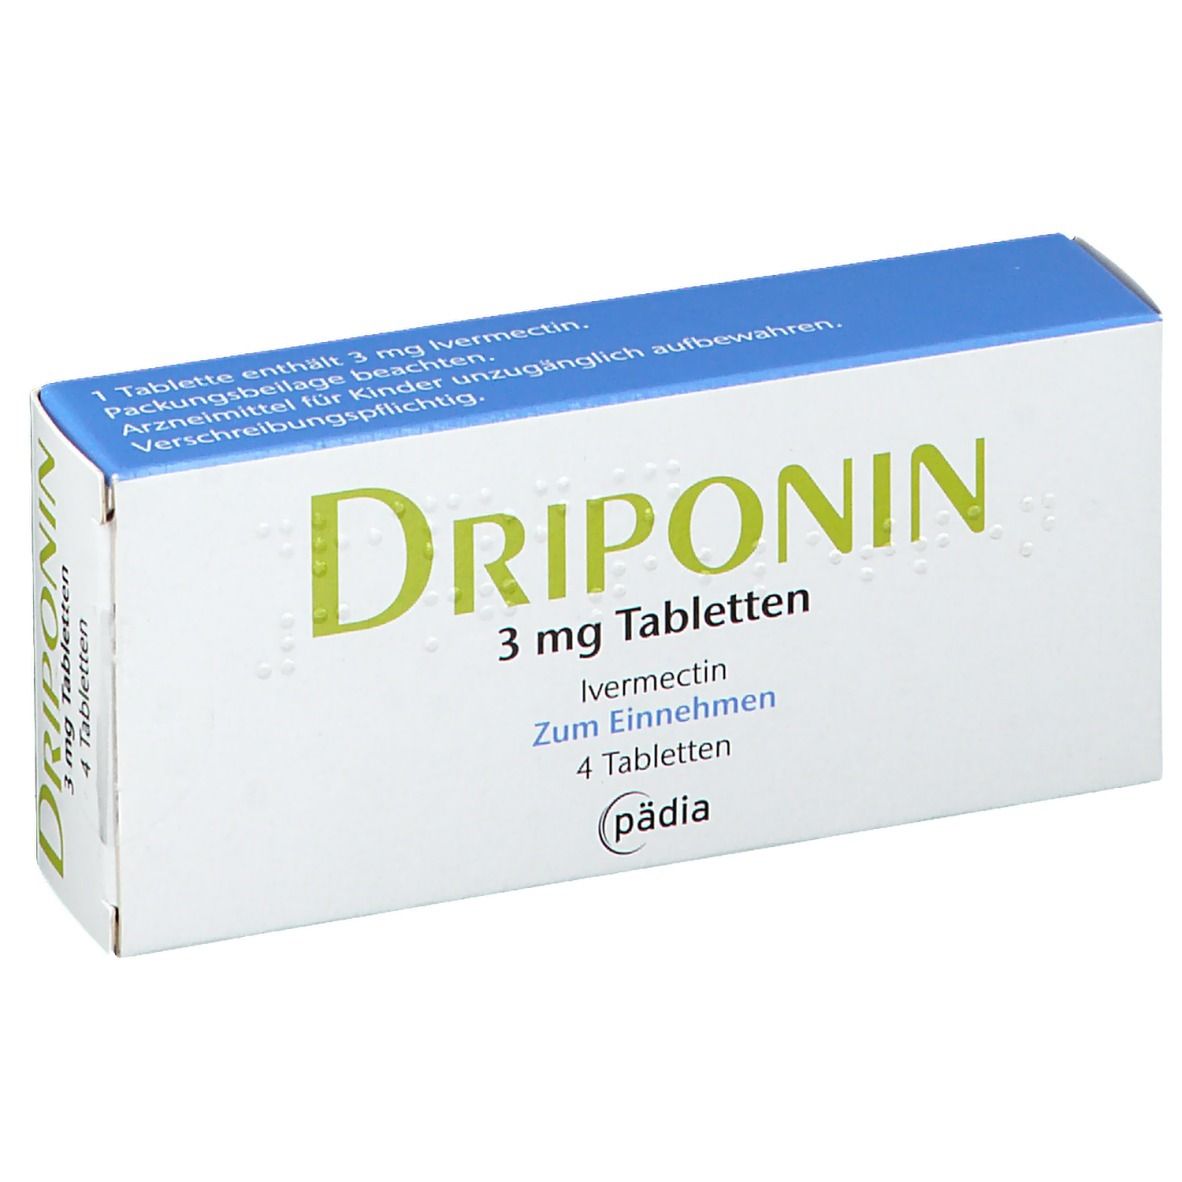 Driponin 3 mg 8 St mit dem E-Rezept kaufen - SHOP APOTHEKE